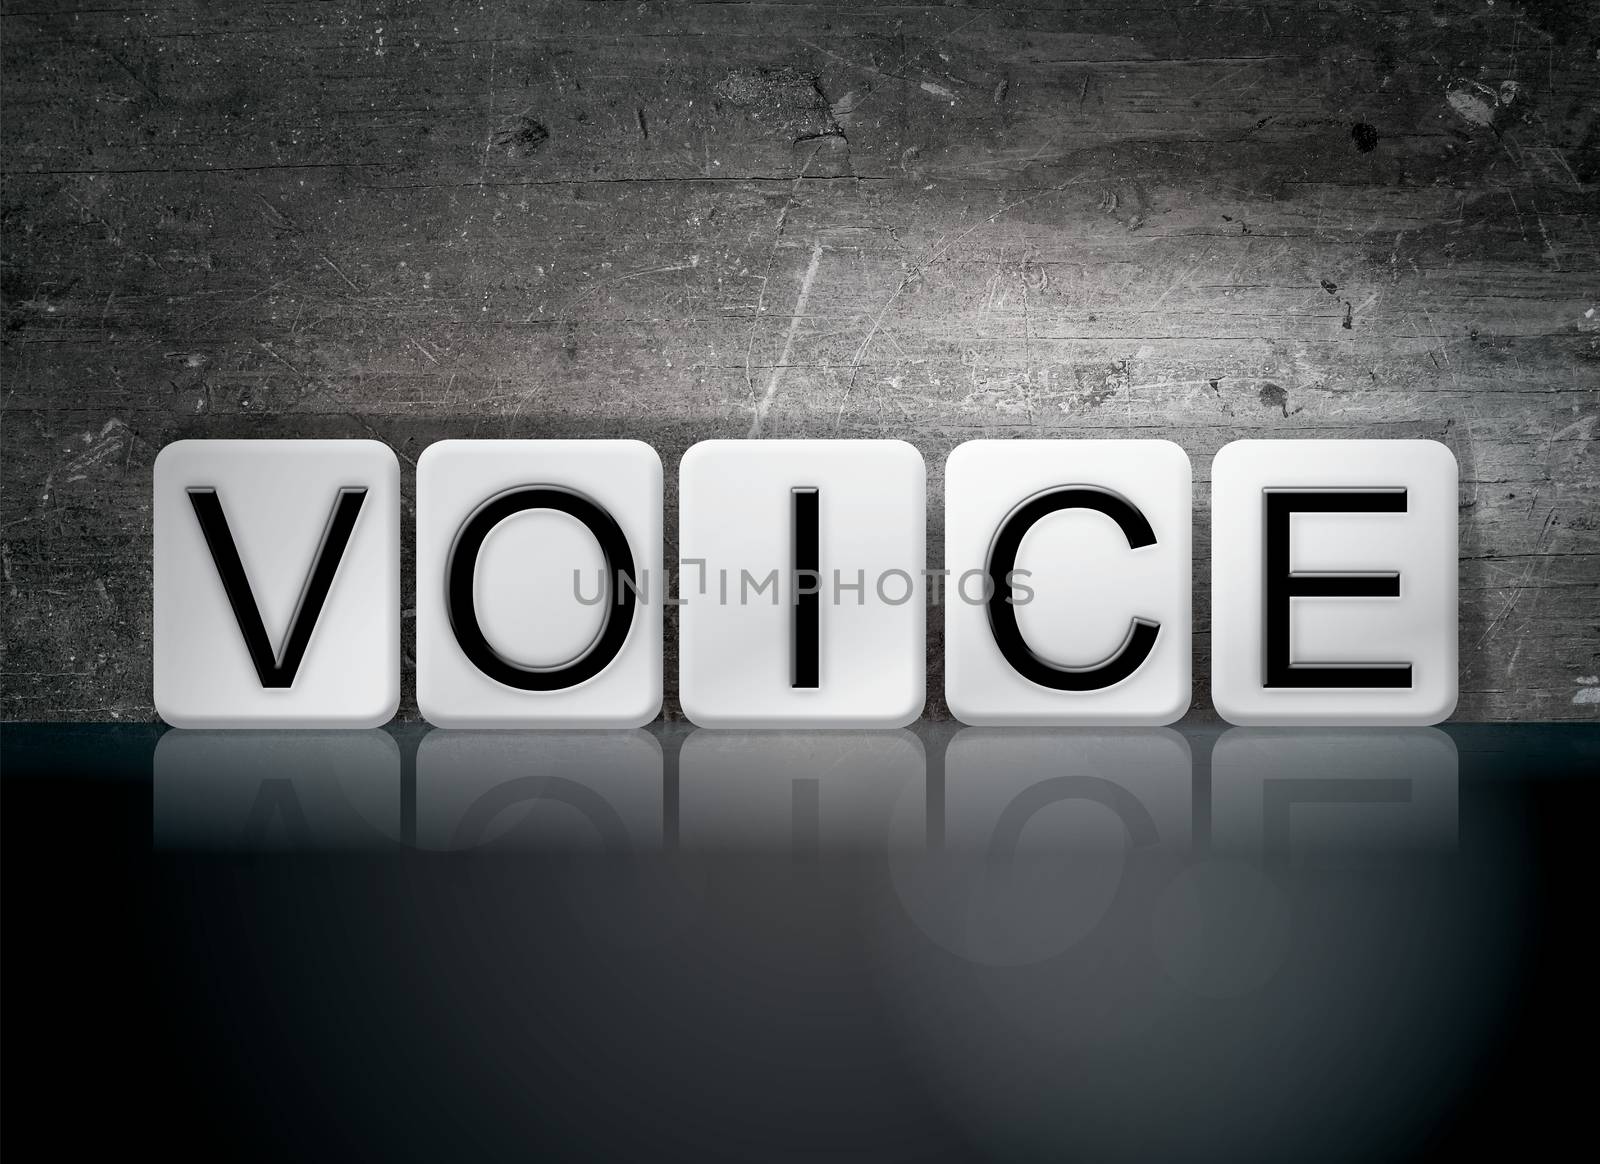 The word "Voice" written in white tiles against a dark vintage grunge background.